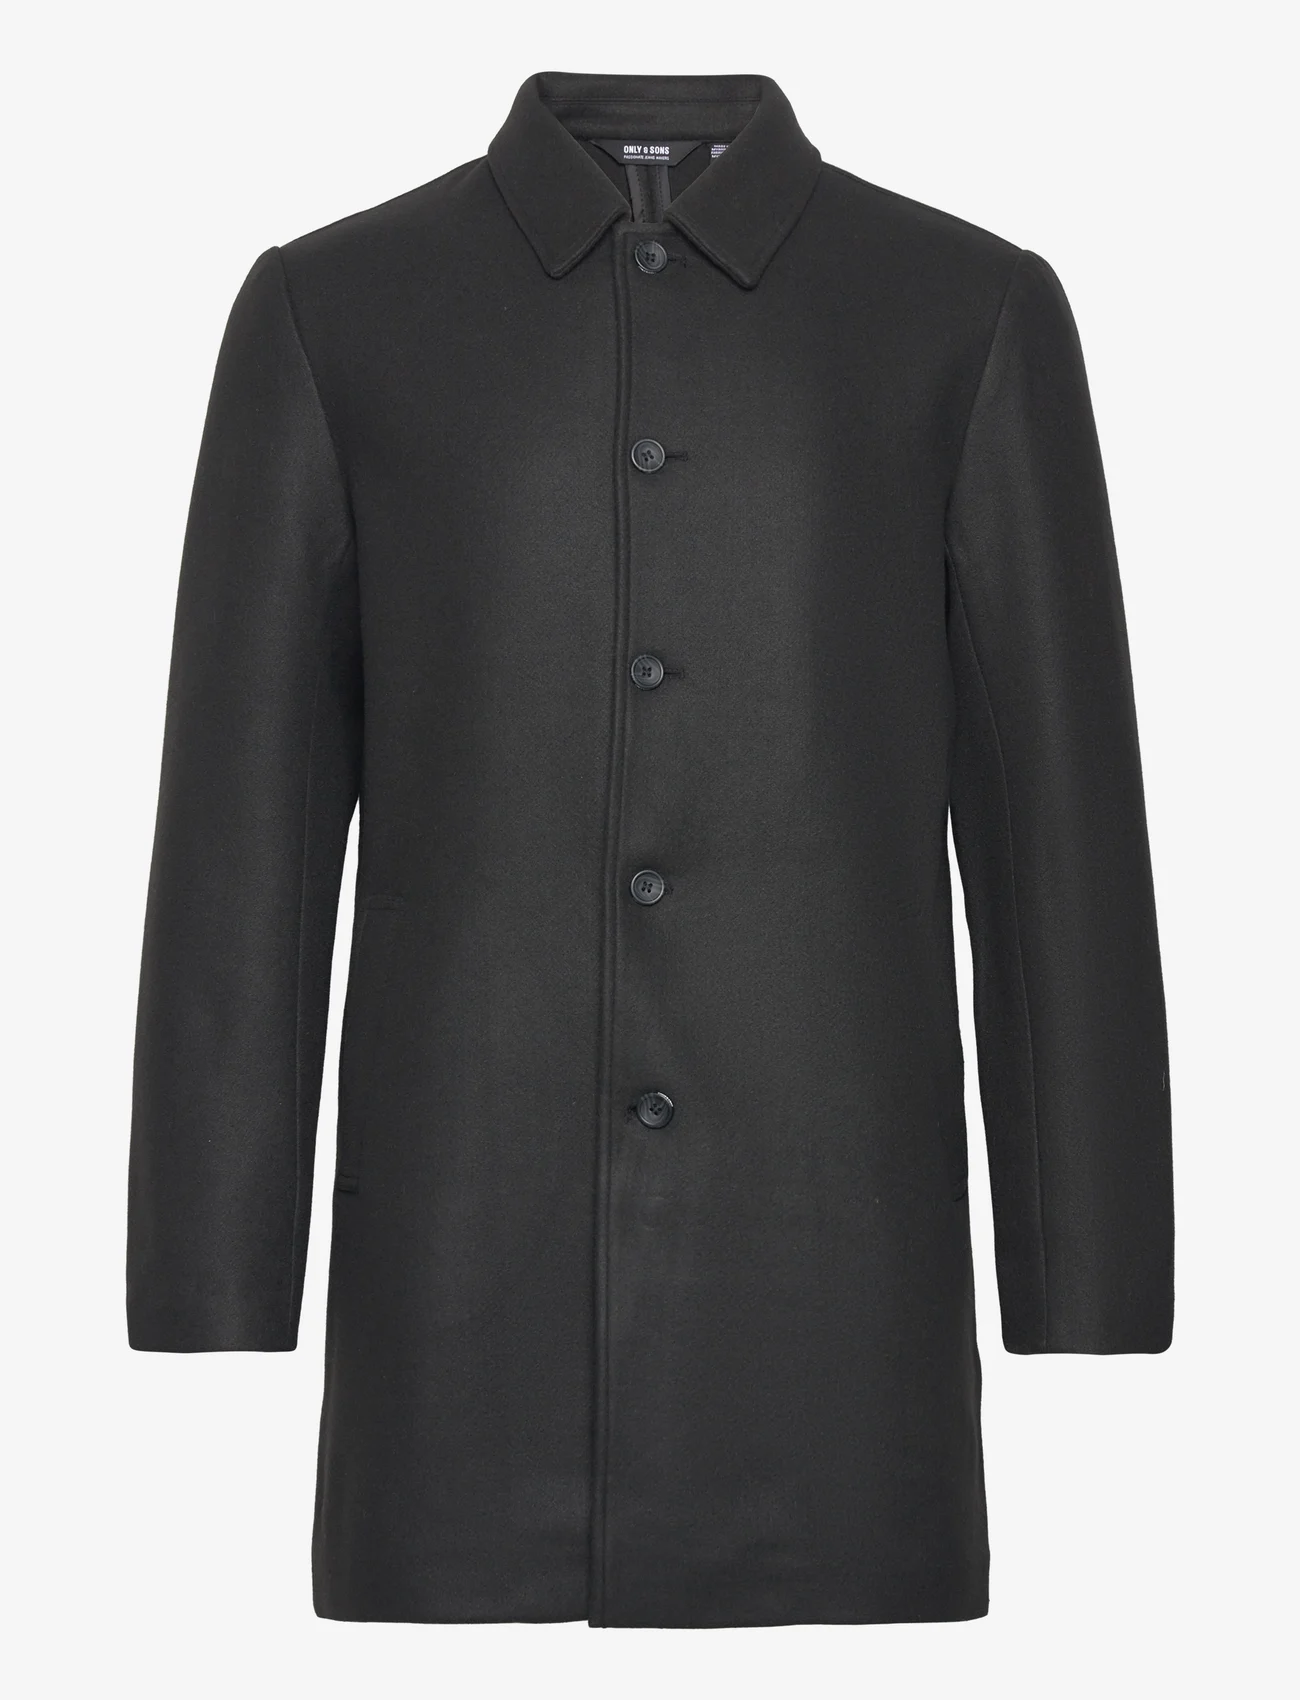 ONLY & SONS - ONSADAM COAT OTW VD - winter jackets - black - 0